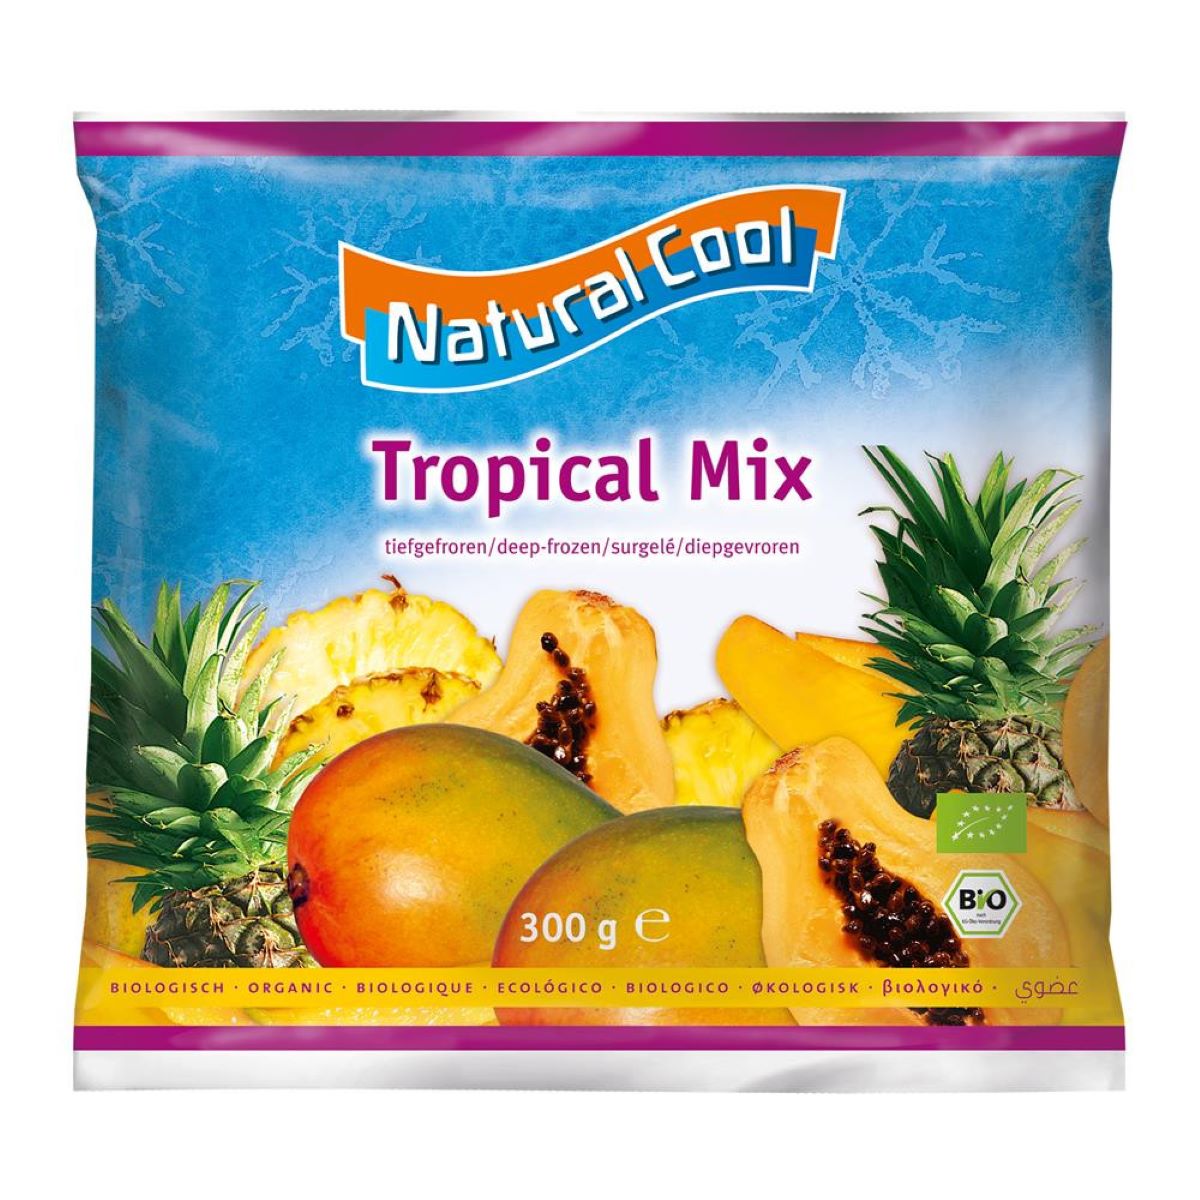 Natural Cool Organic Tropical Mix 300g